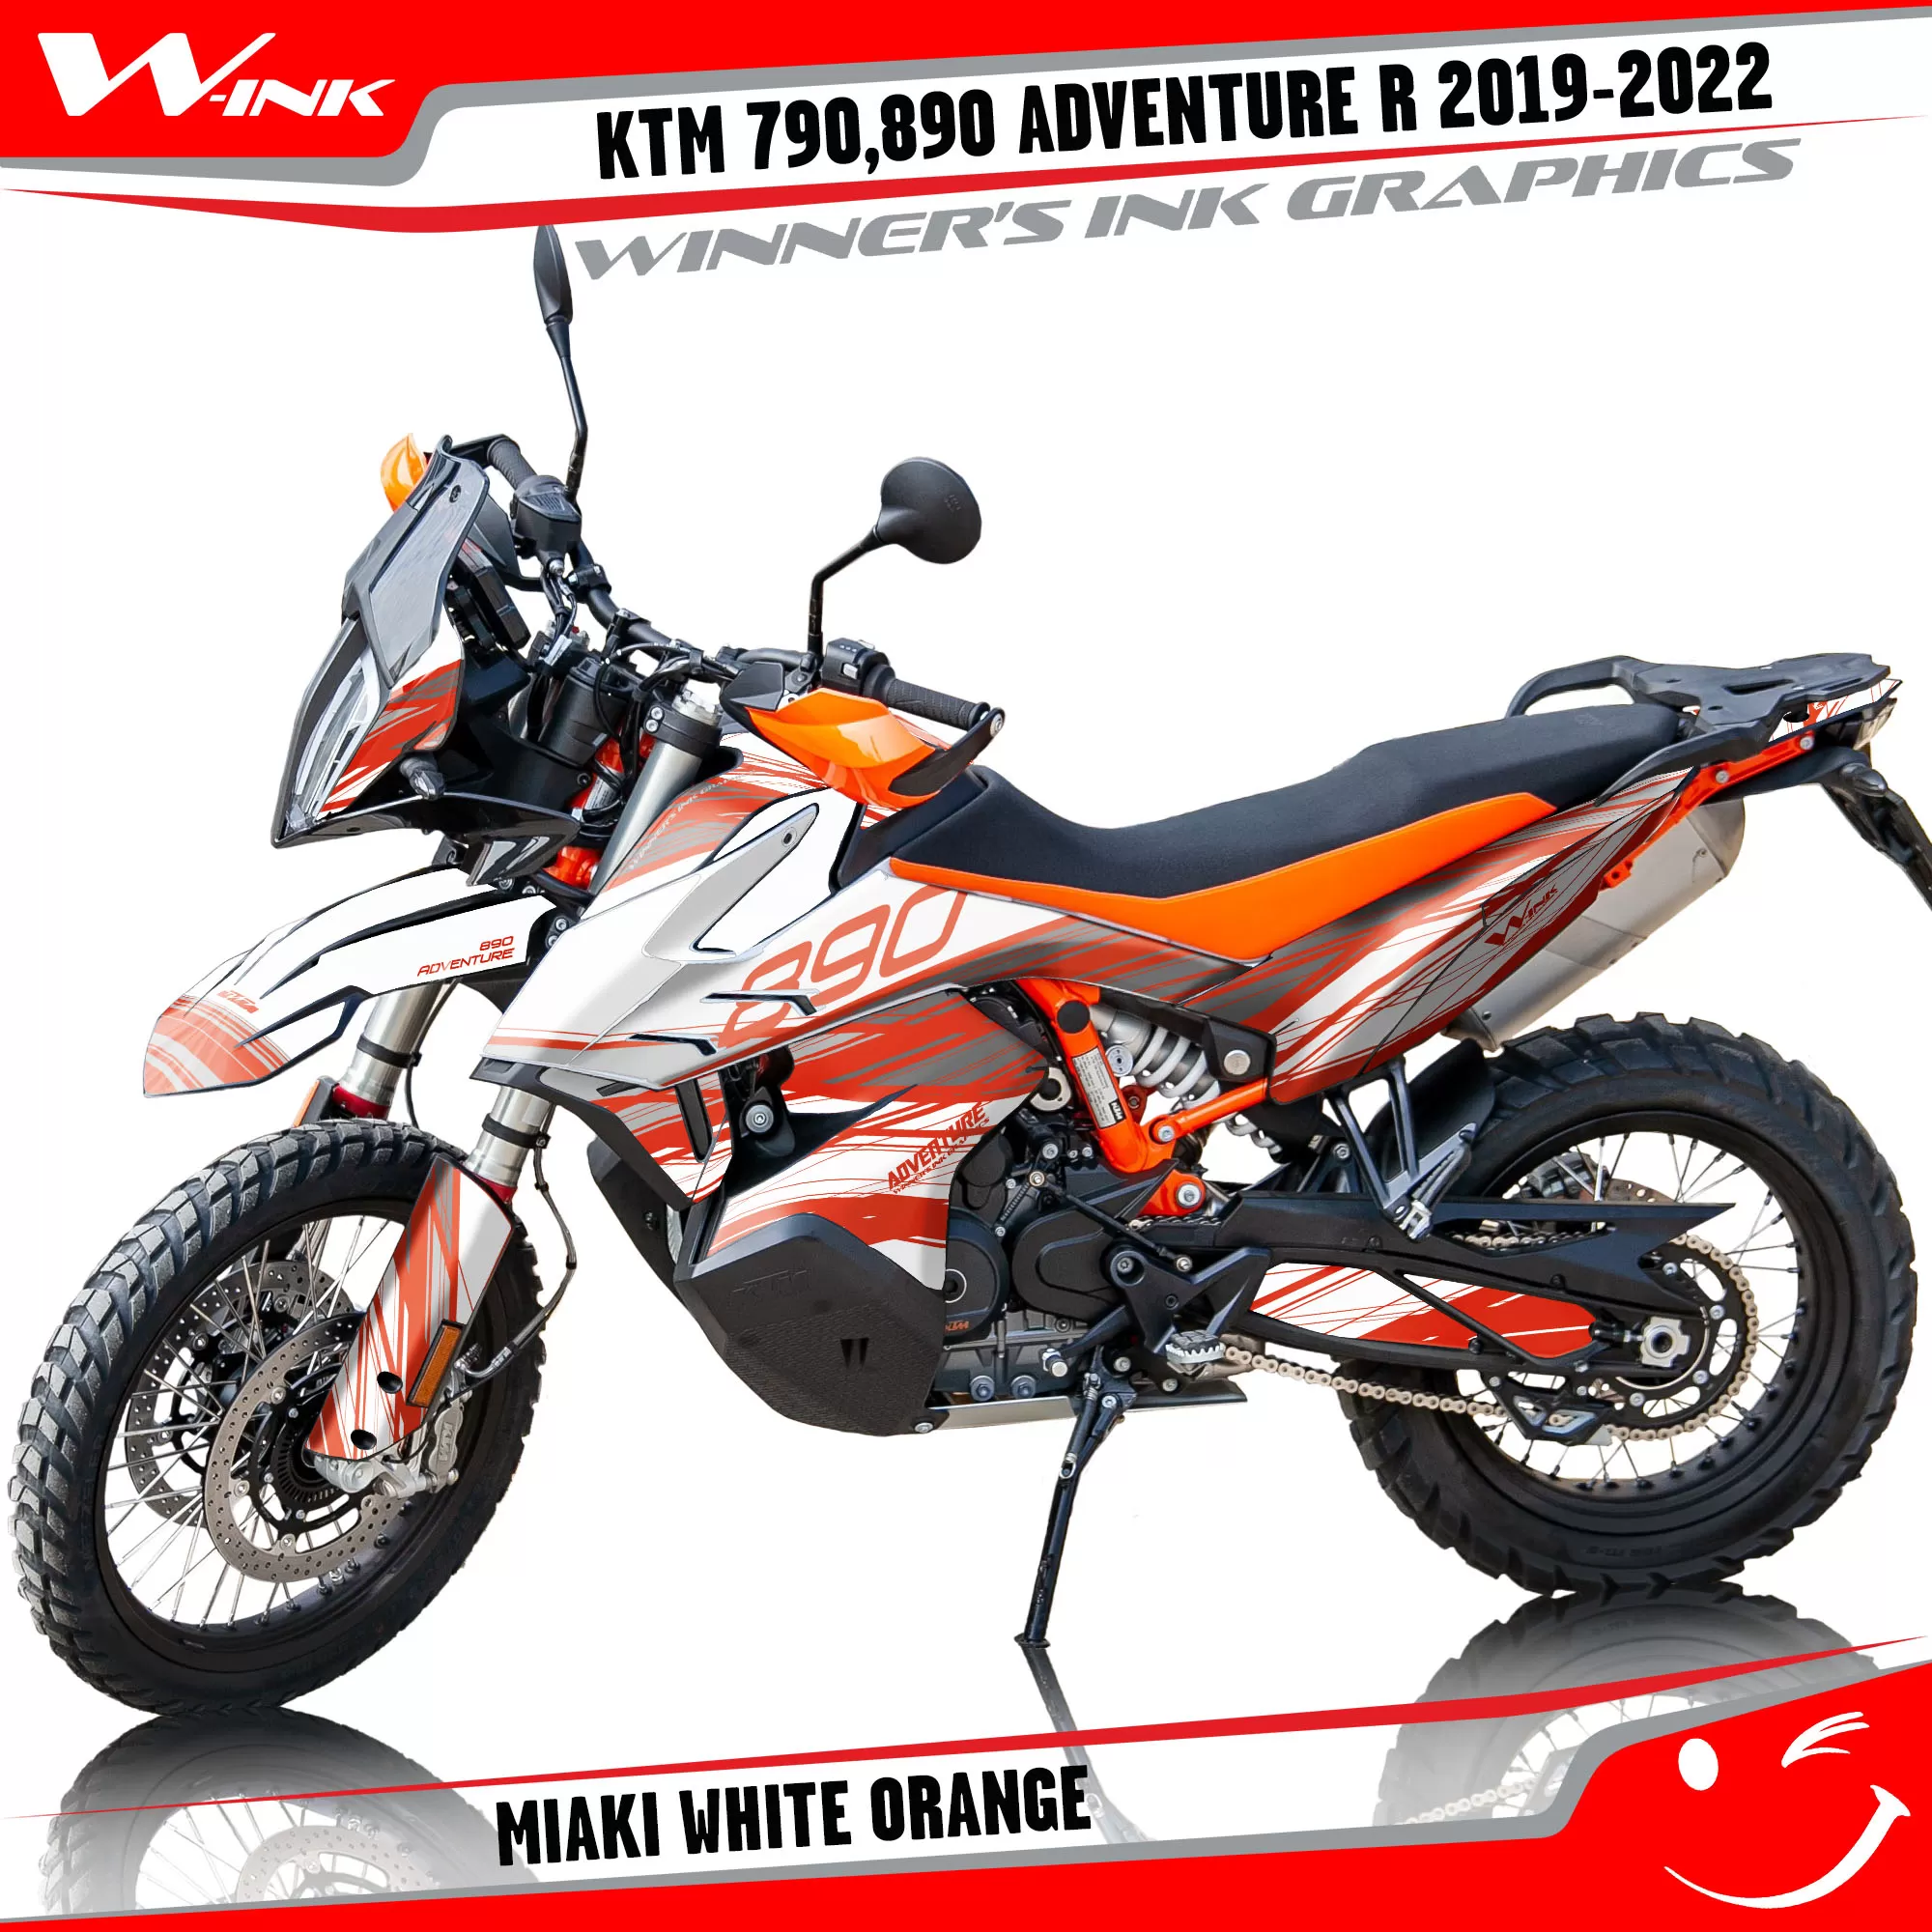 Adventure-R-790-890-2019-2020-2021-2022-graphics-kit-and-decals-with-designs-Miaki-White-Orange